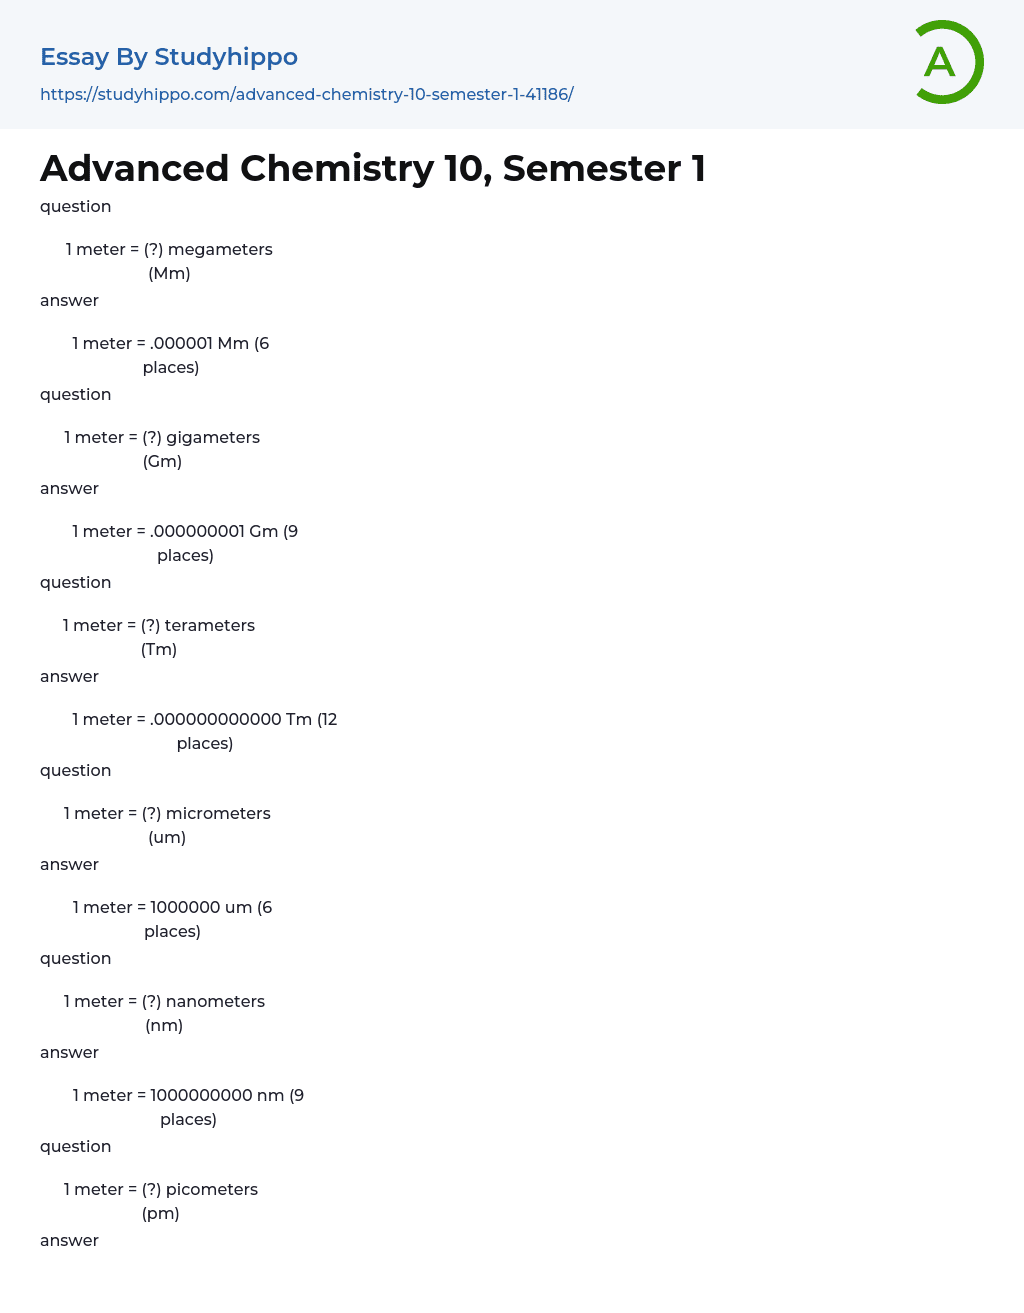 Advanced Chemistry 10, Semester 1 Essay Example